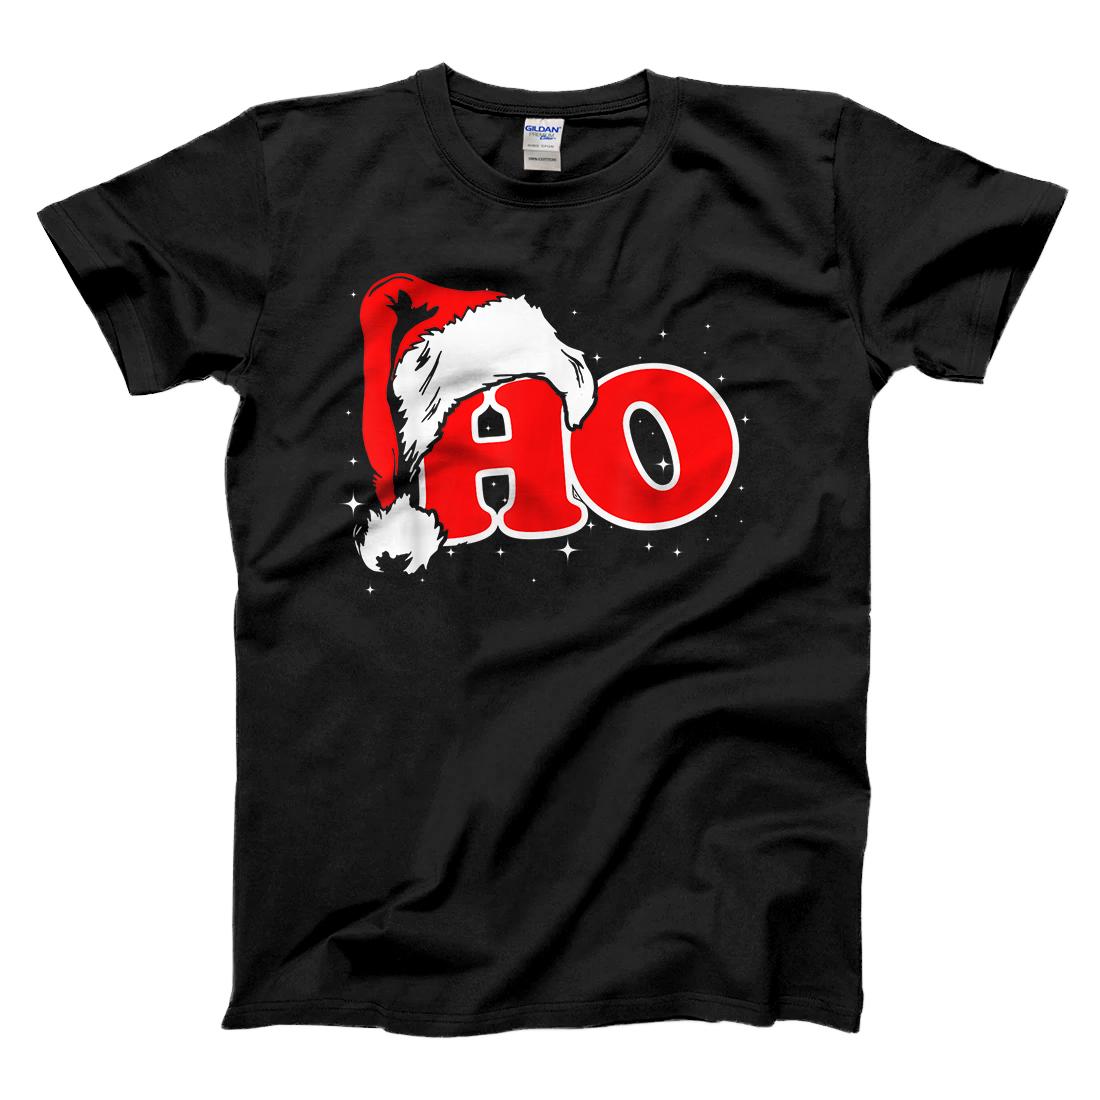 Personalized Funny, Retro, Ho, Christmas, Santa Where My Hos At, Group T-Shirt